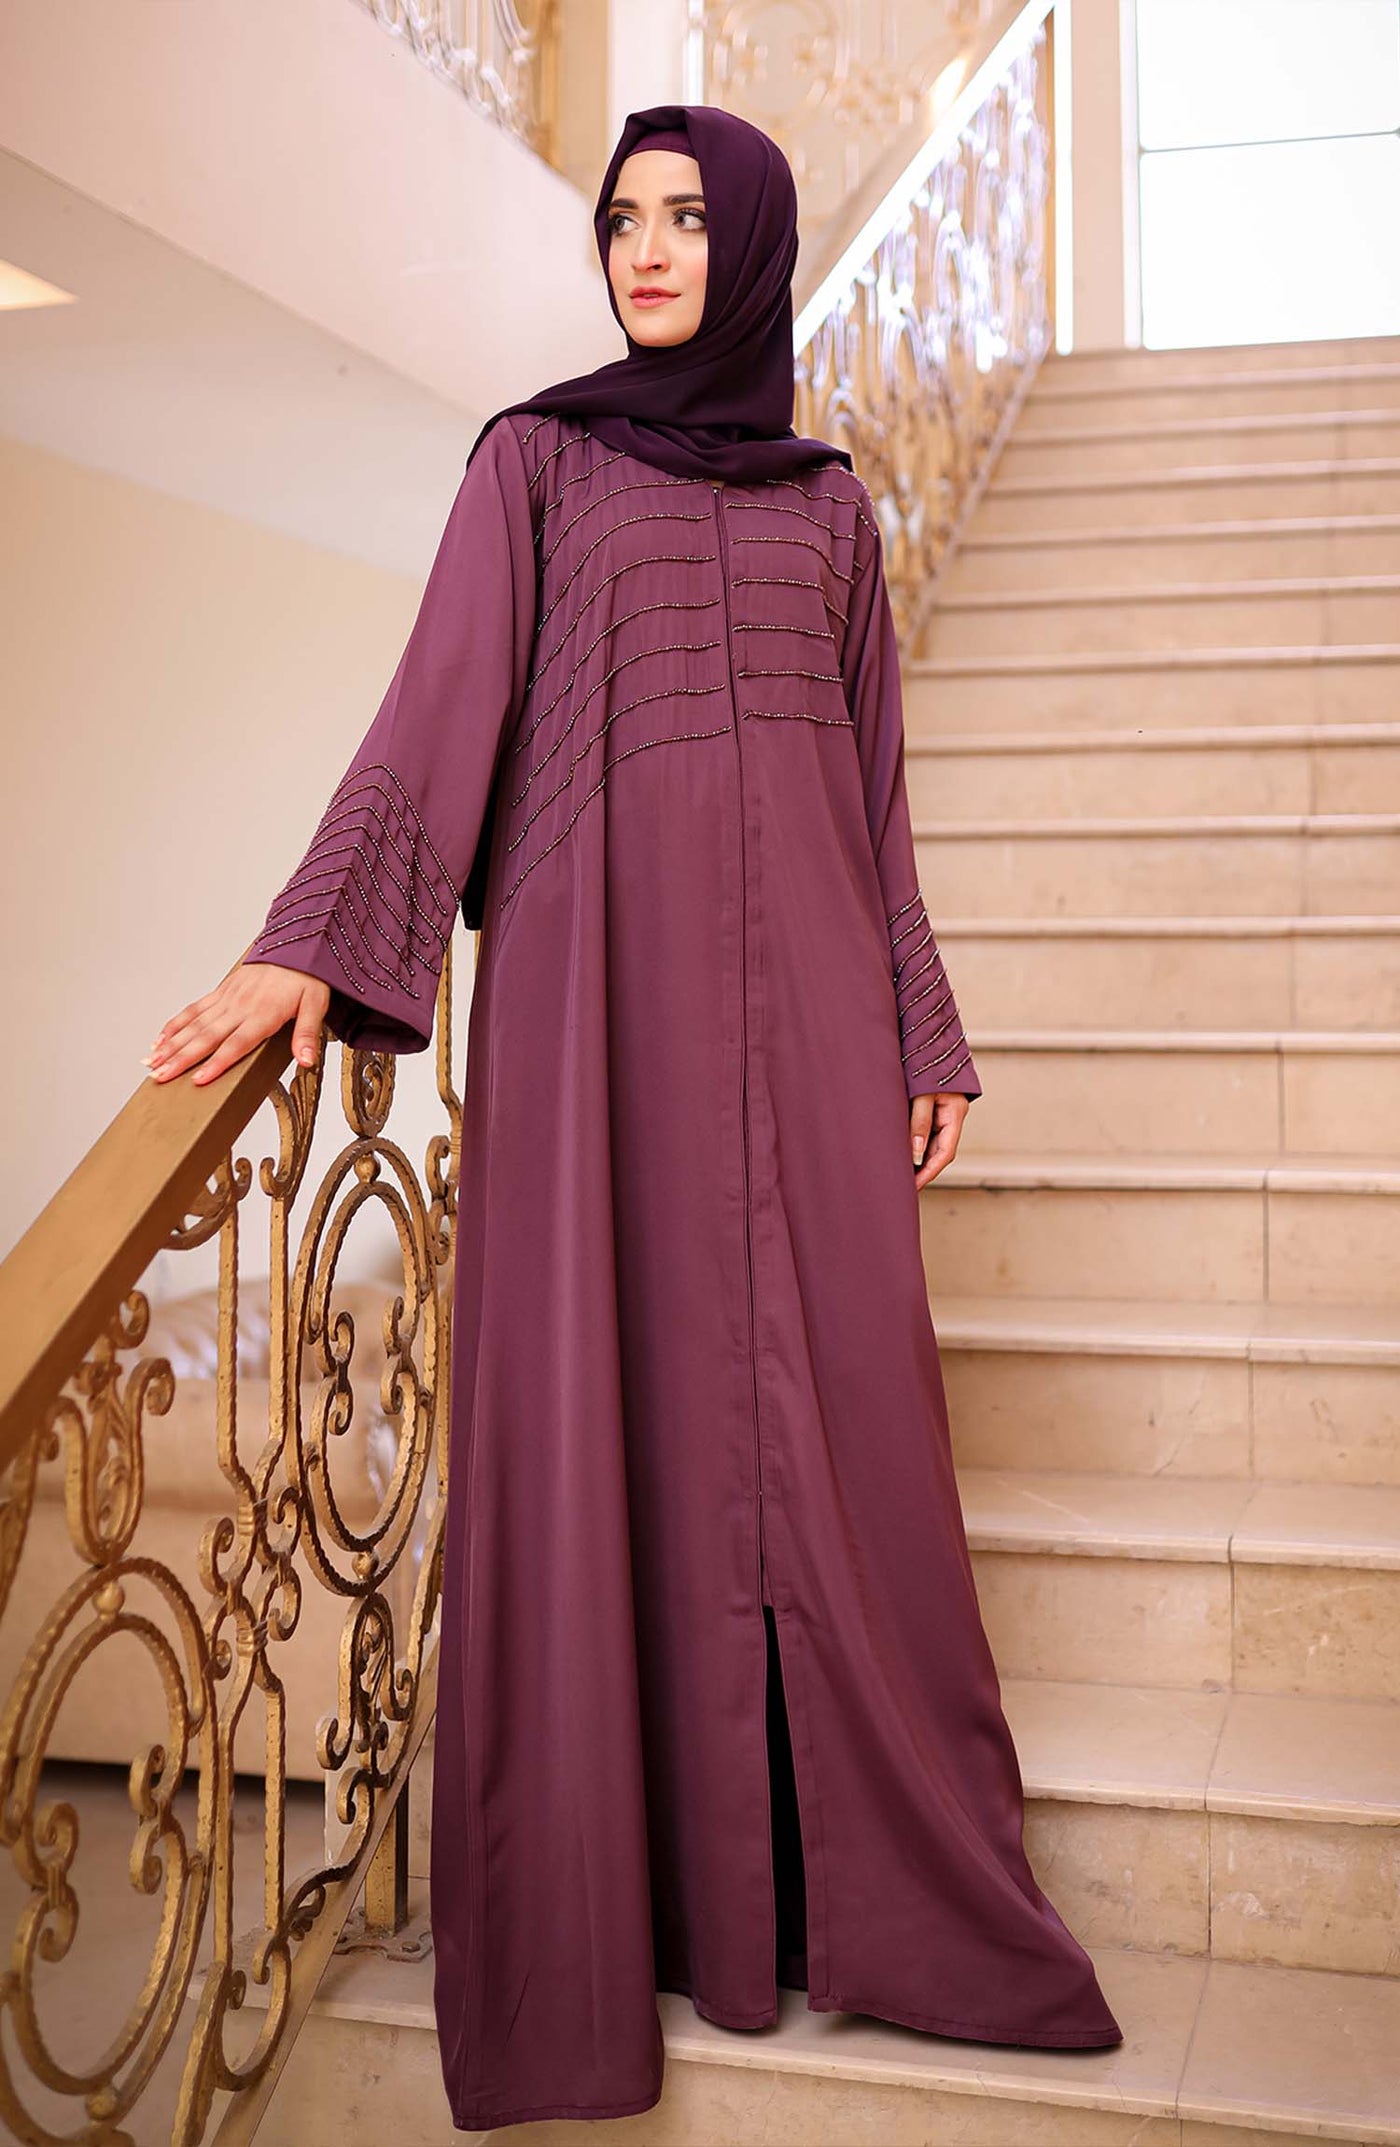 Stylish and modern abaya design in Pakistan